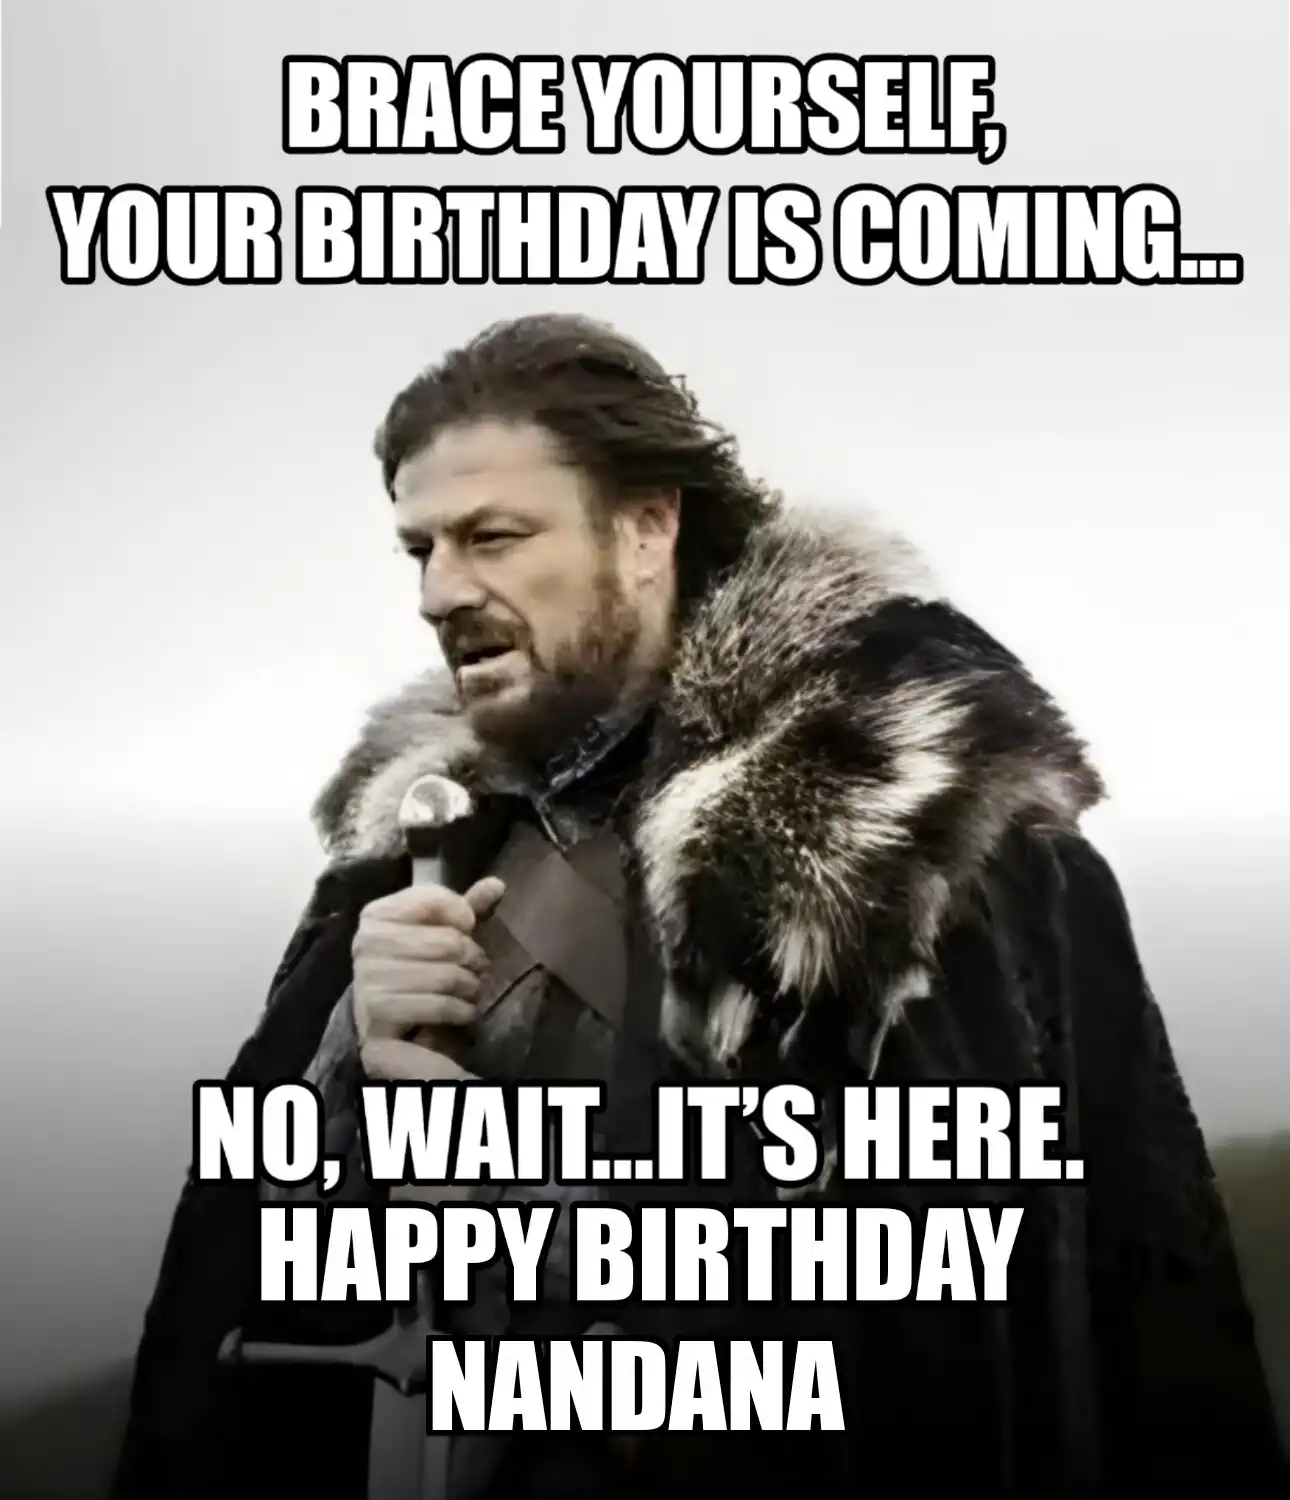 Happy Birthday Nandana Brace Yourself Your Birthday Is Coming Meme